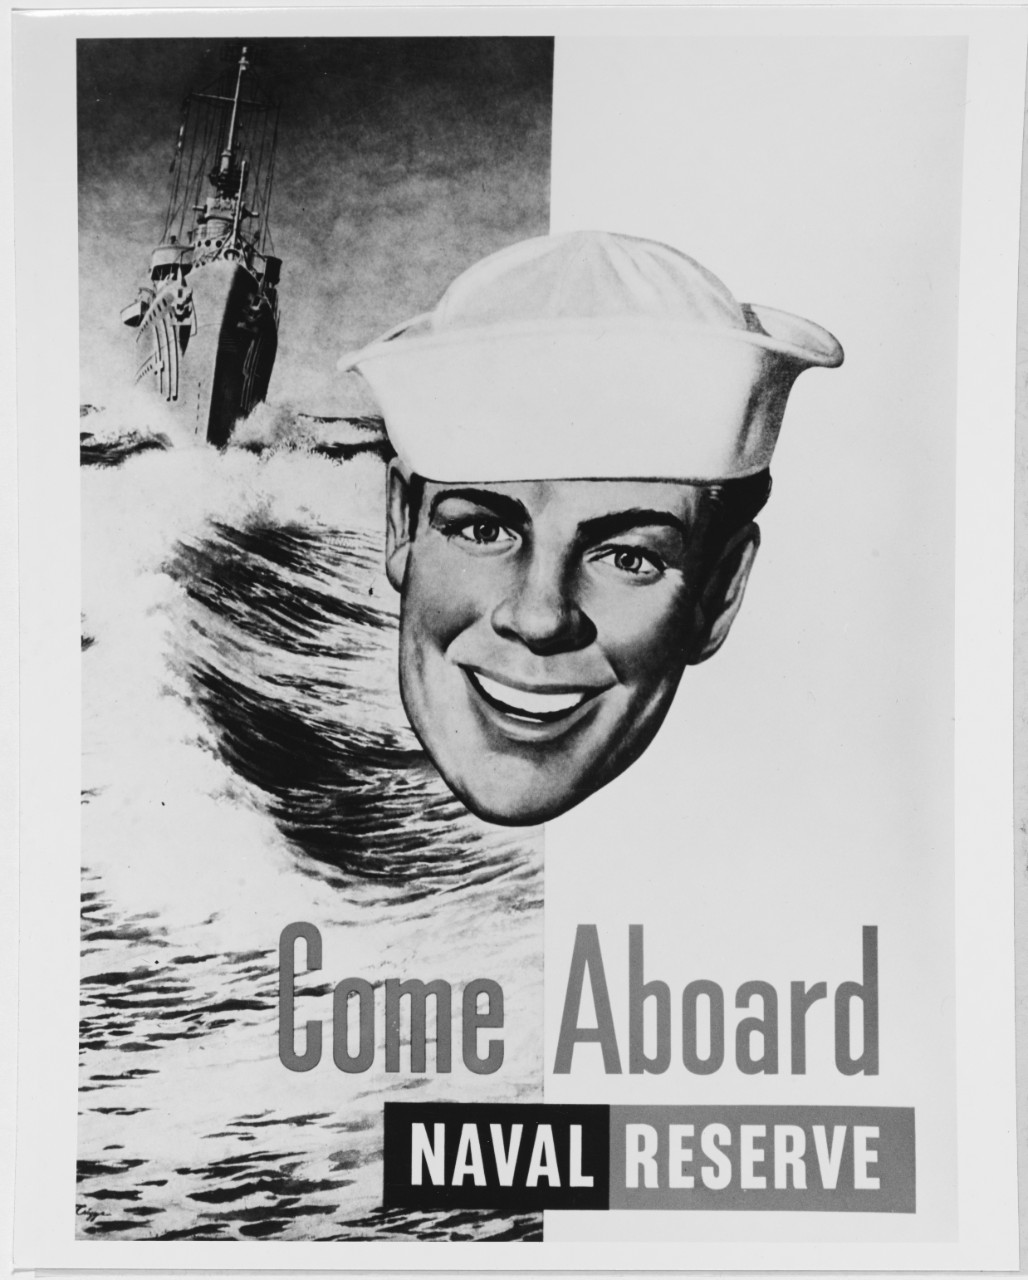 Navy Recruiting Poster